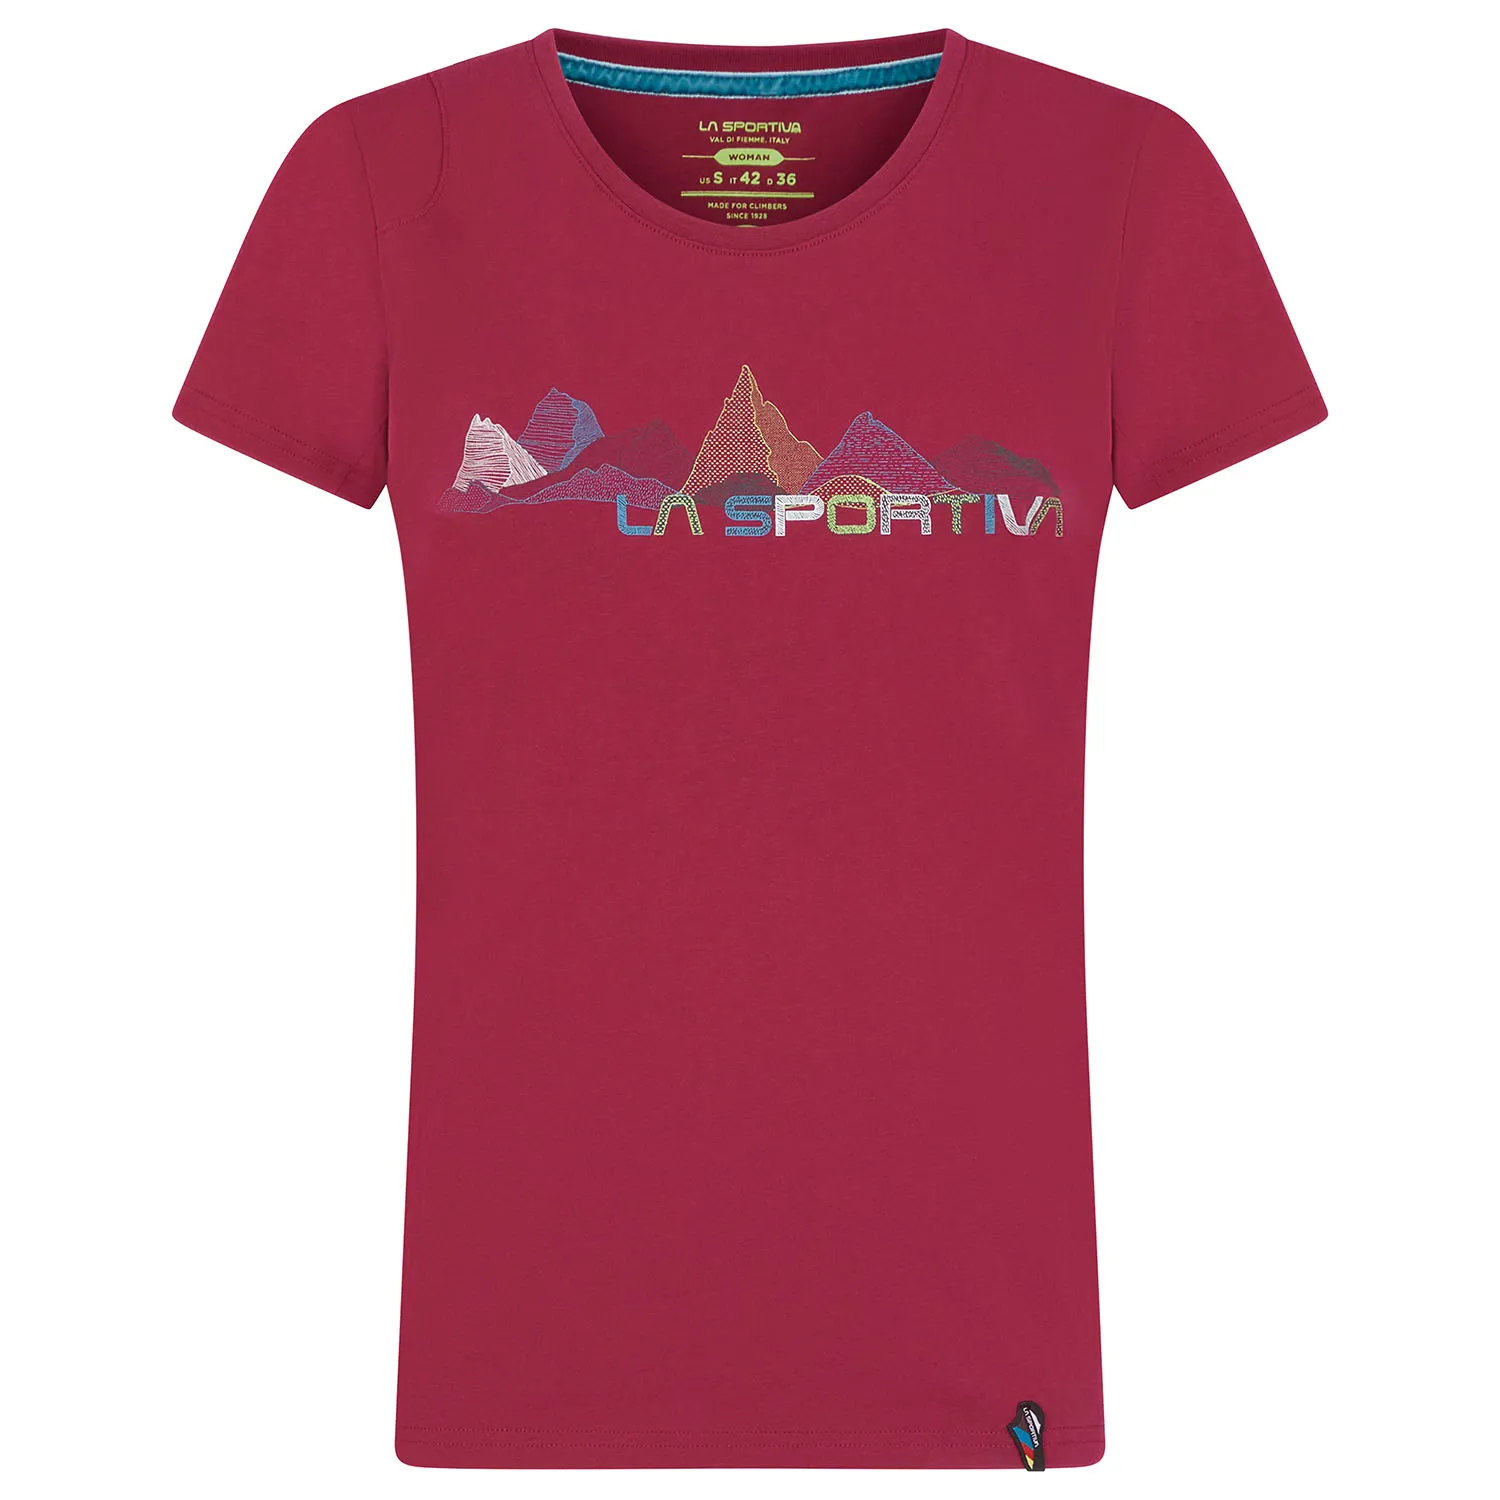 La Sportiva Peaks T-Shirt